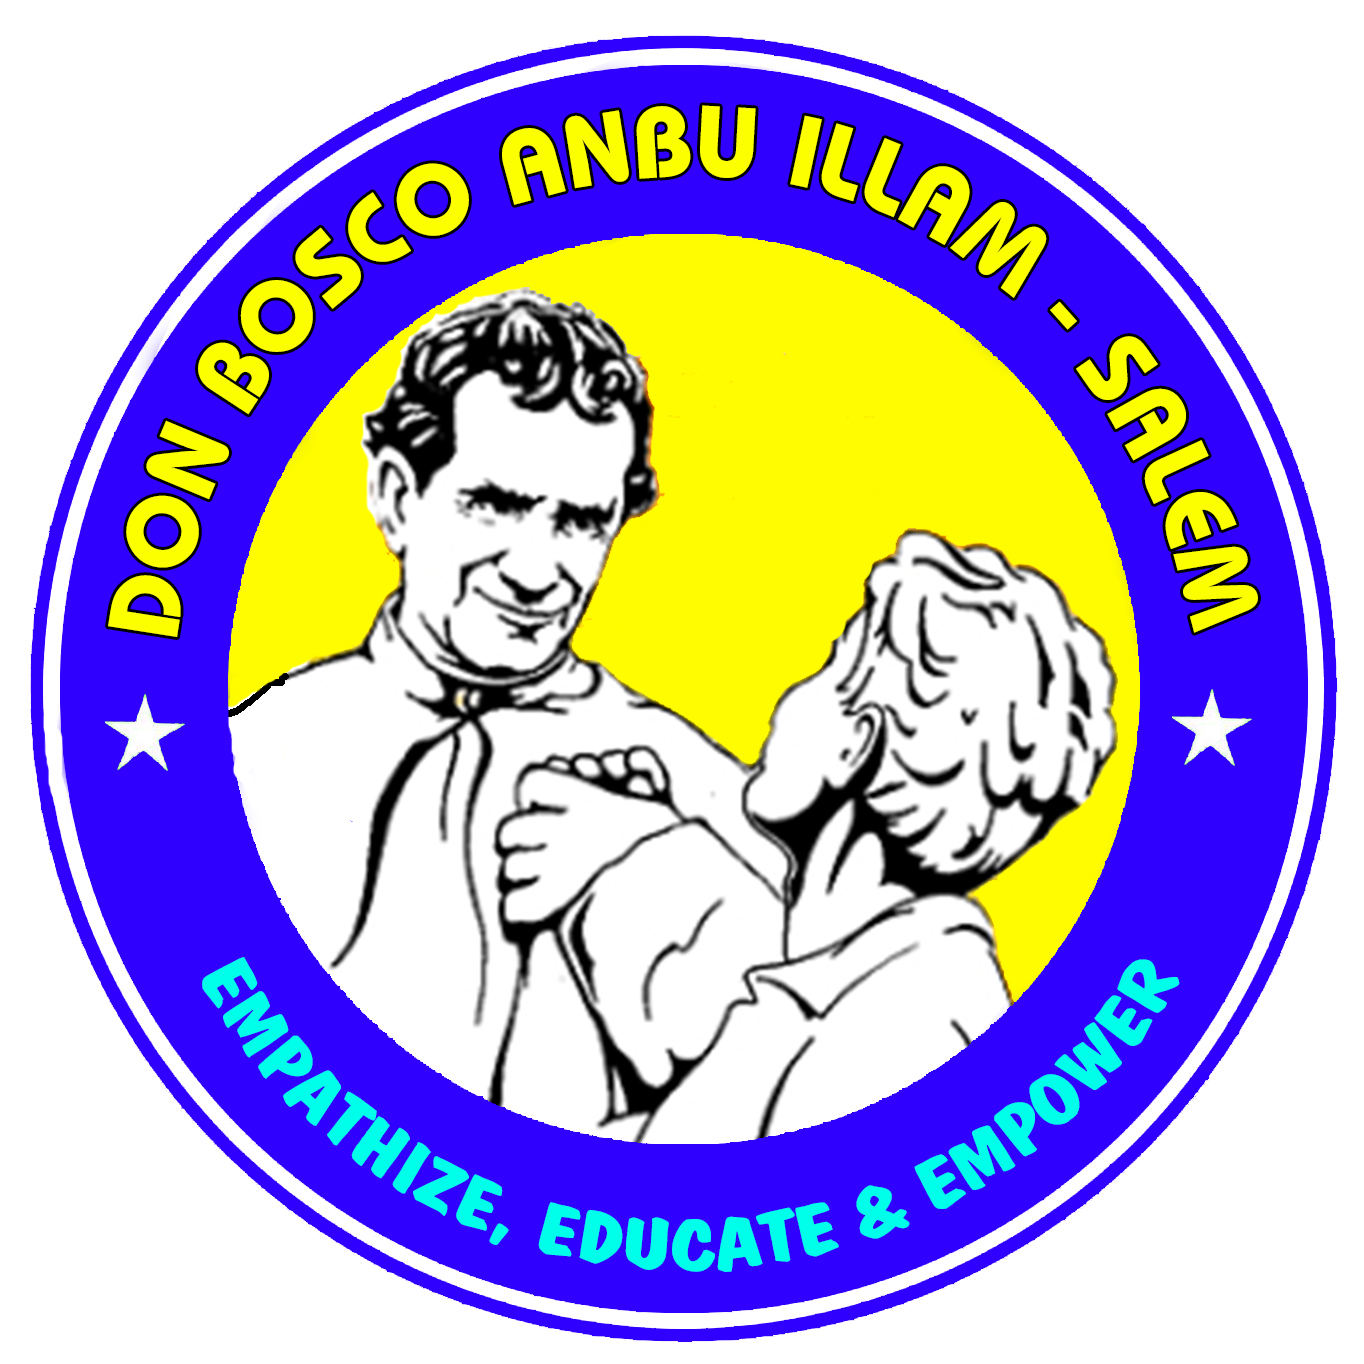 The Salem Don Bosco Anbu Illam Social Service Society